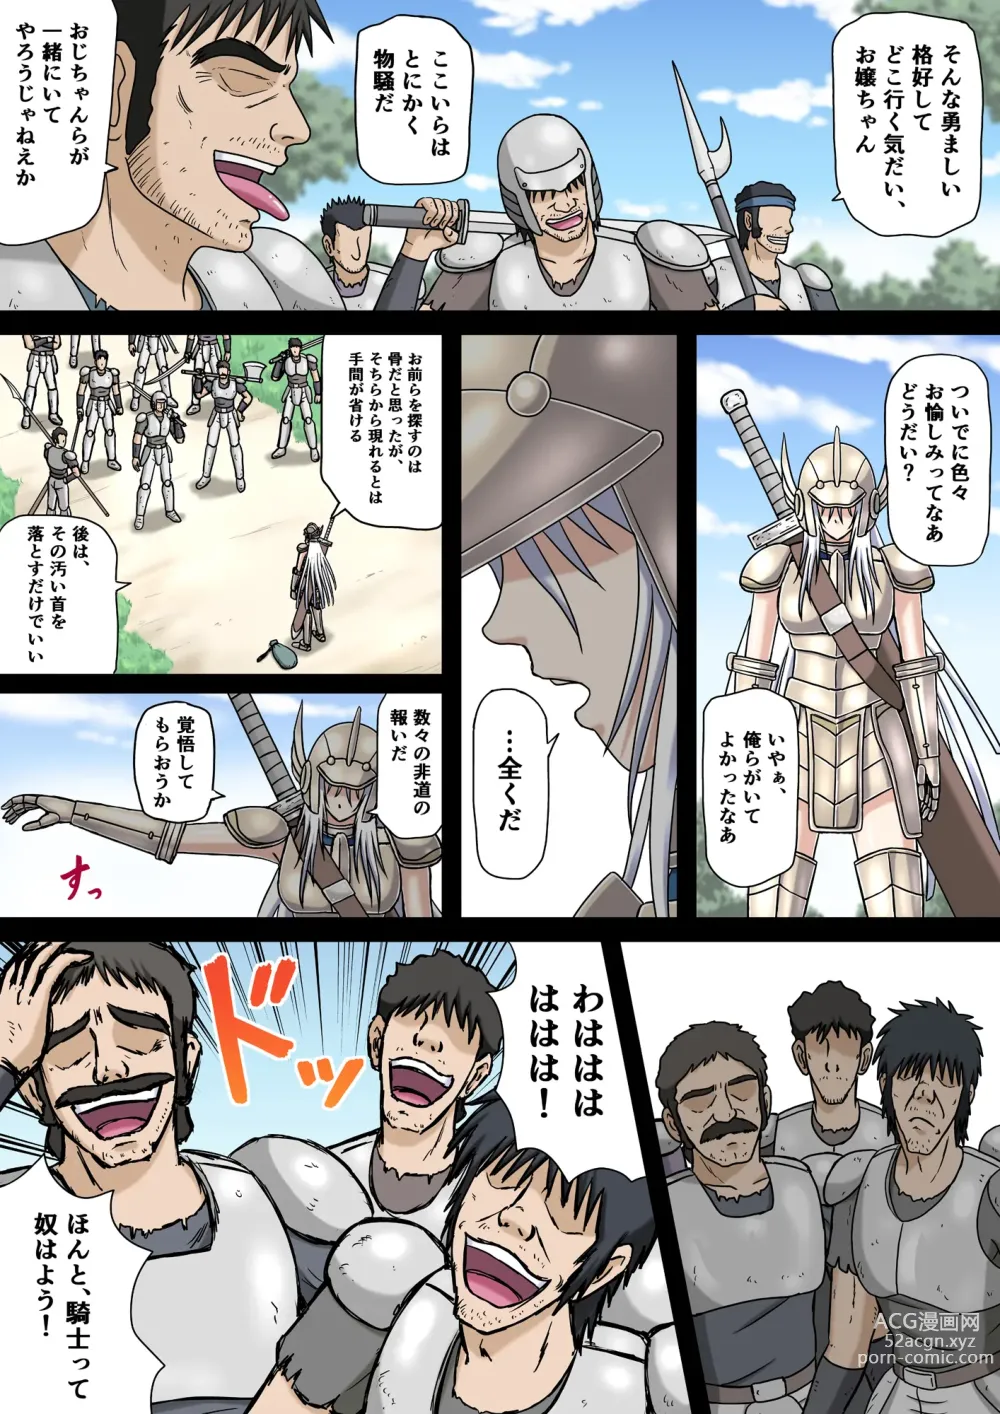 Page 4 of doujinshi Onnakishi Abura Jigoku